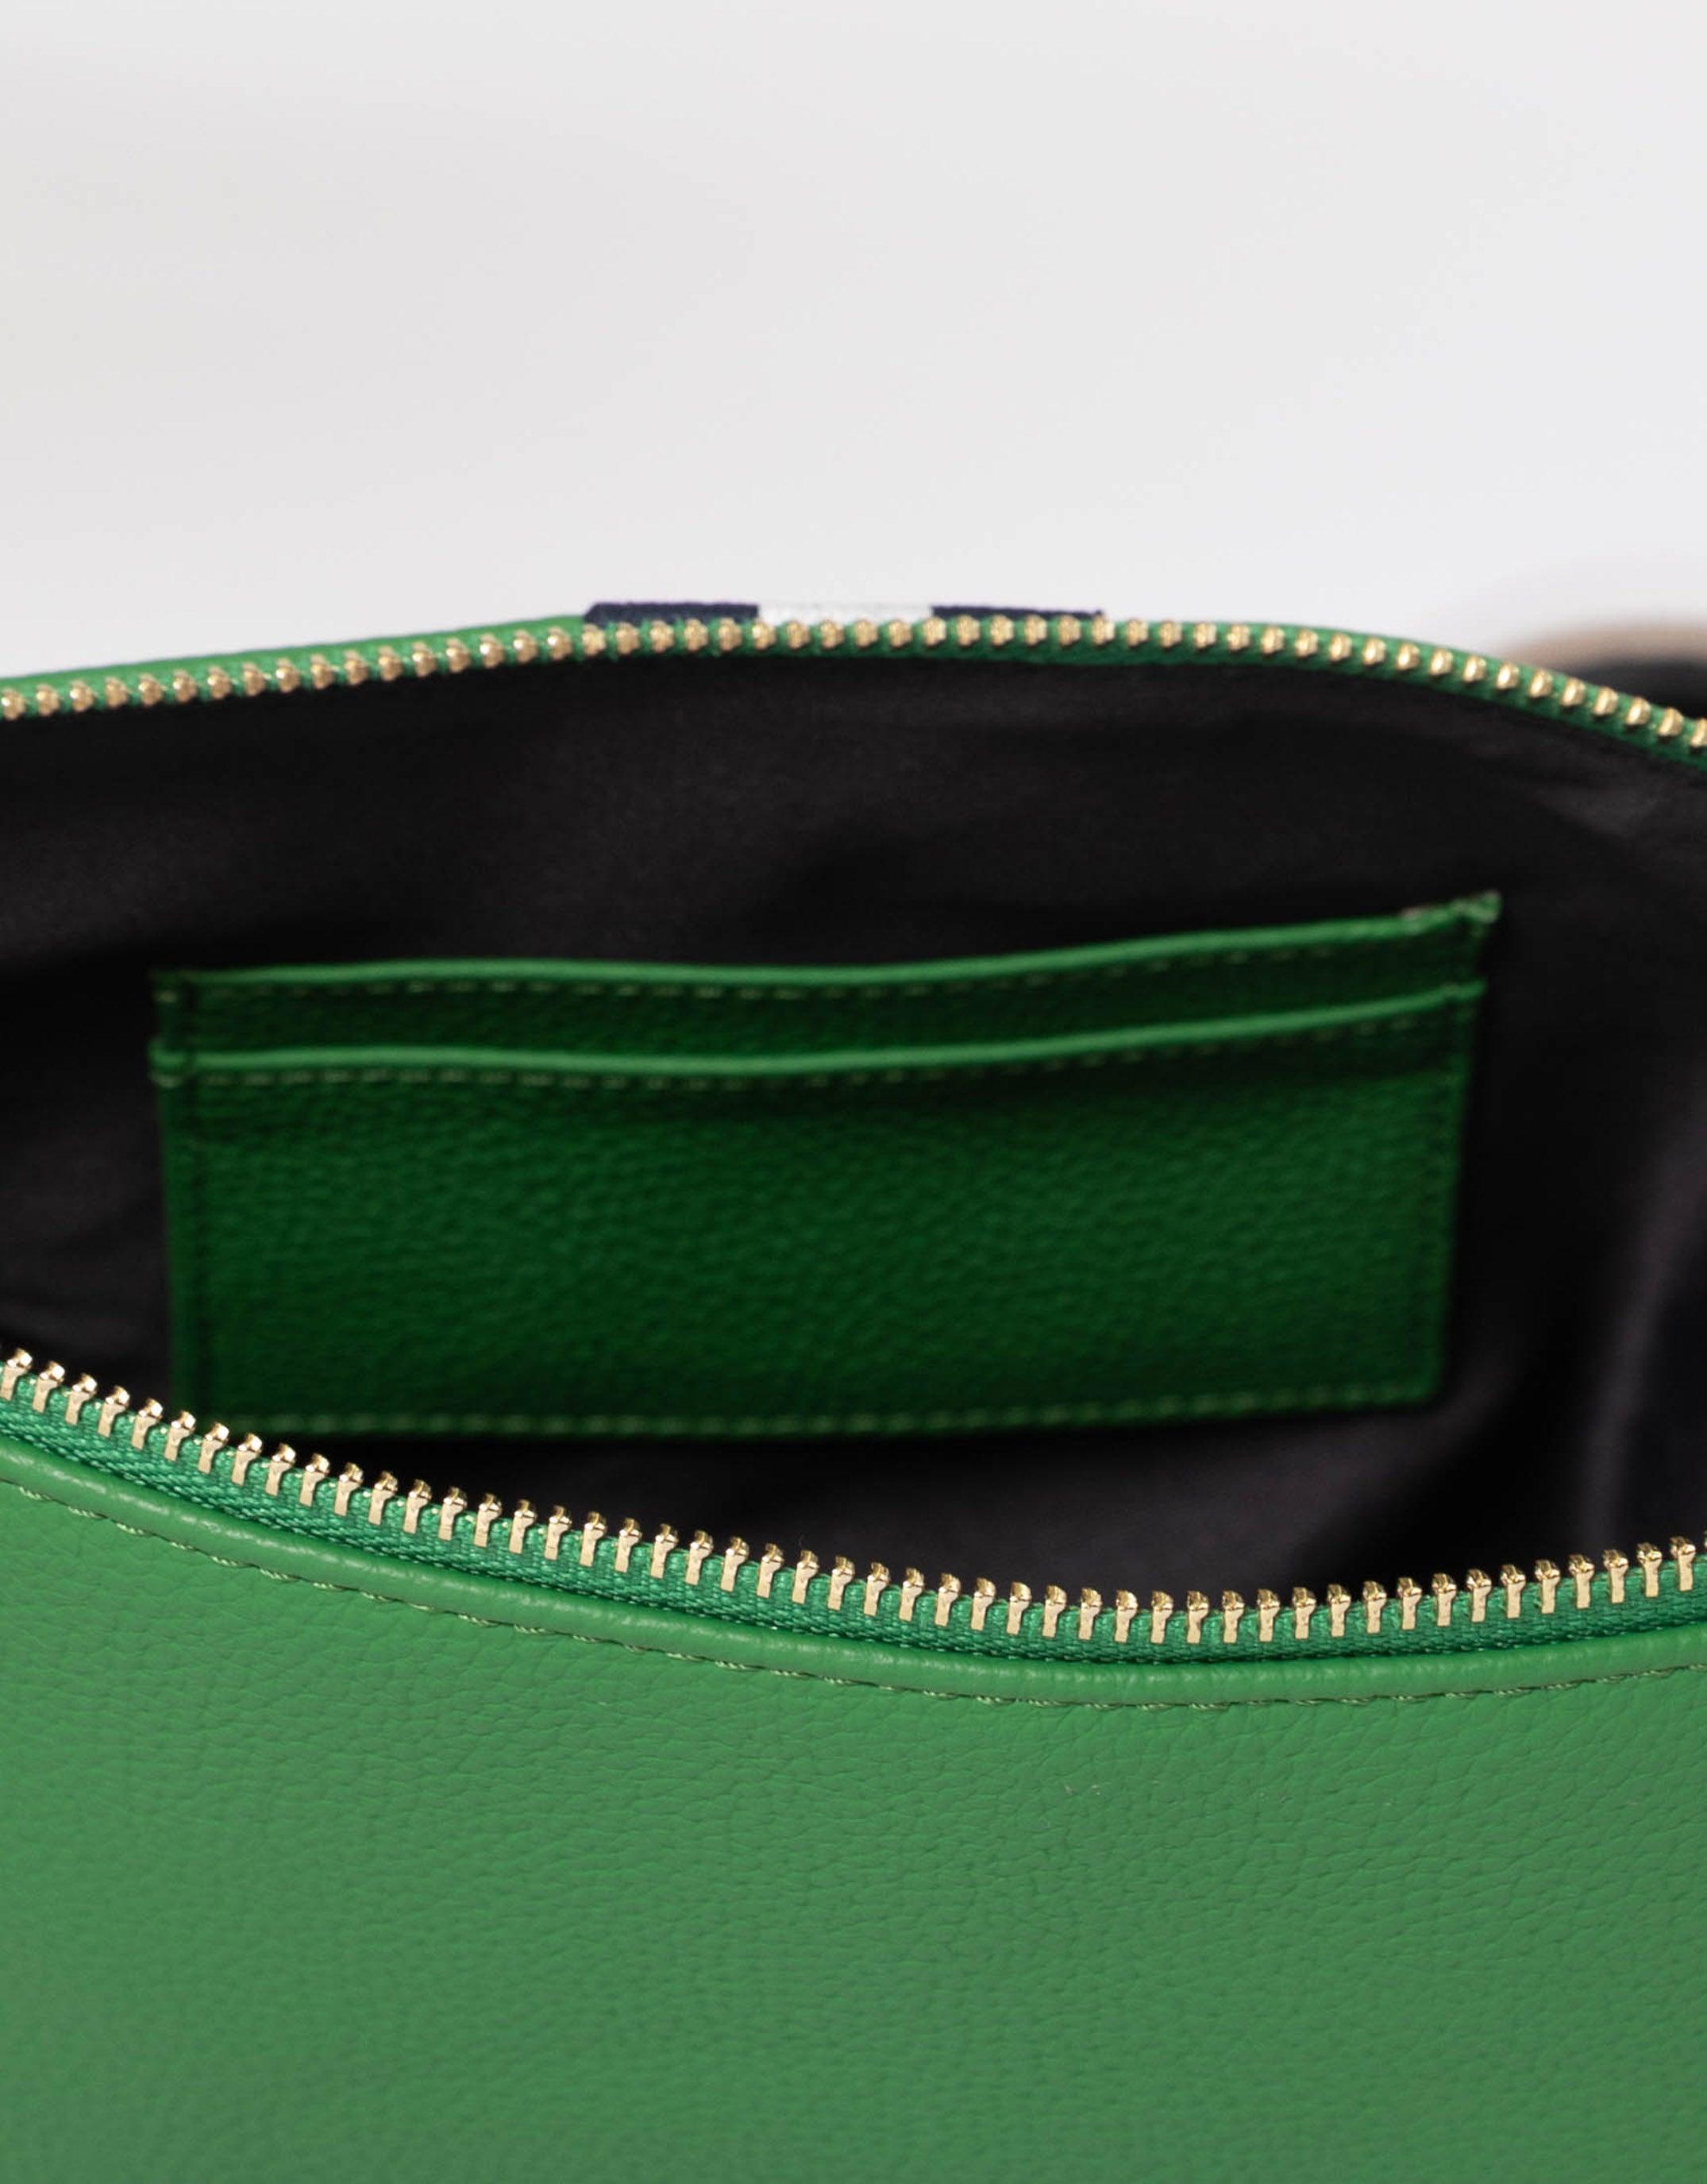 Caitlyn Bag - Emerald/Stripe - paulaglazebrook